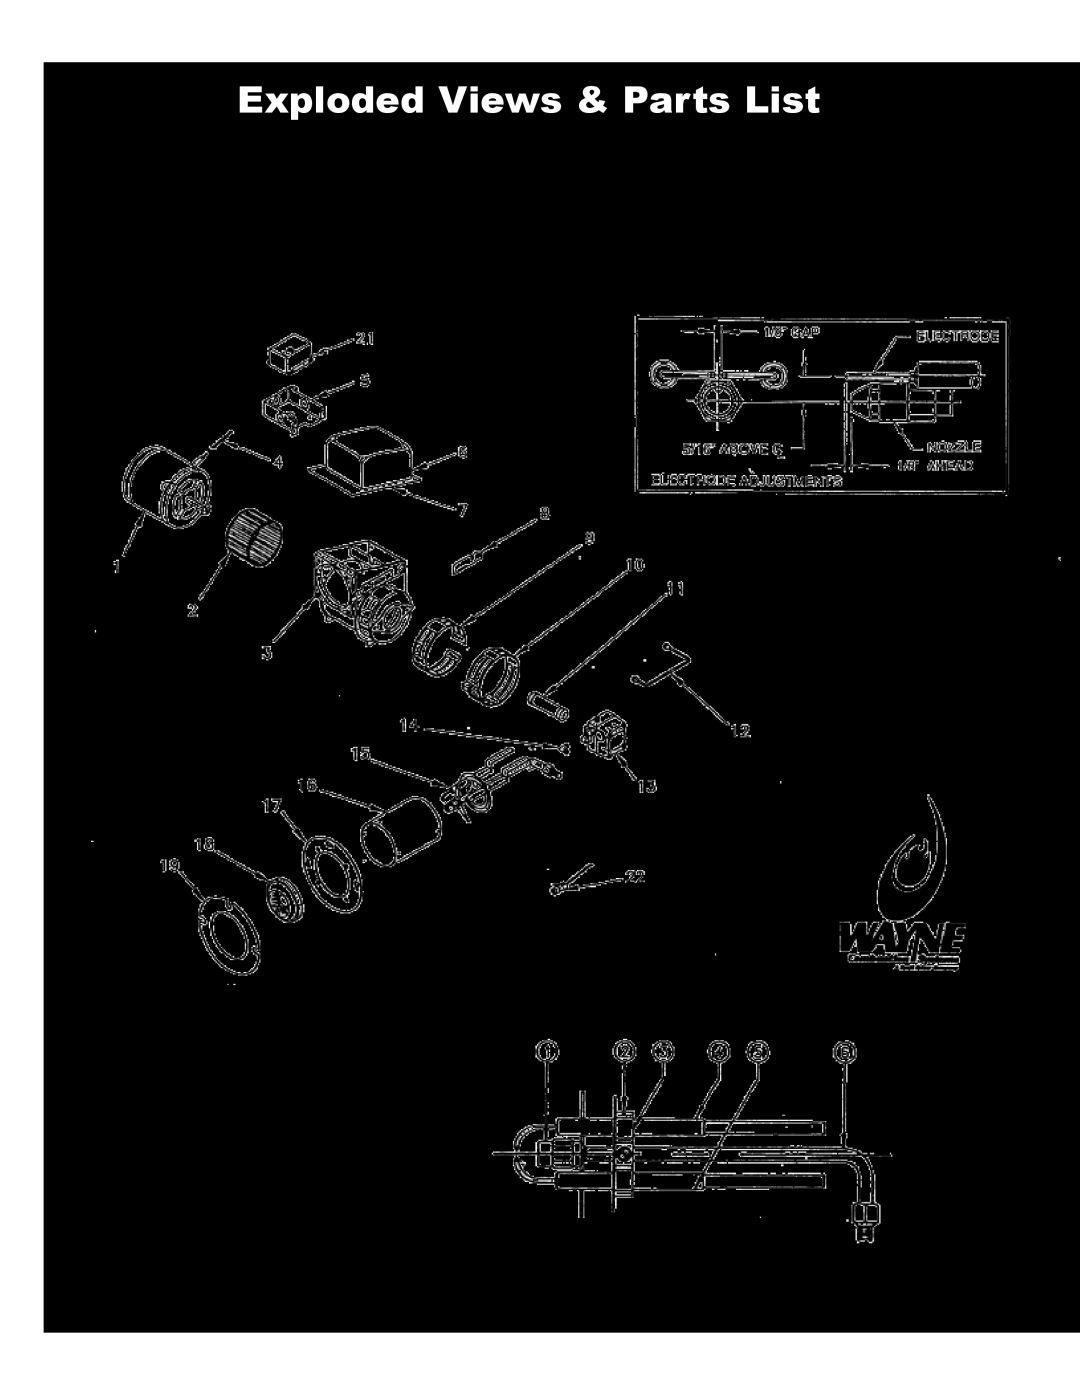 Yukon Advanced Optics Oil Furnace owner manual Wayne Model Msr Oil Burner, Exploded Views & Parts List, Gun Assembly 